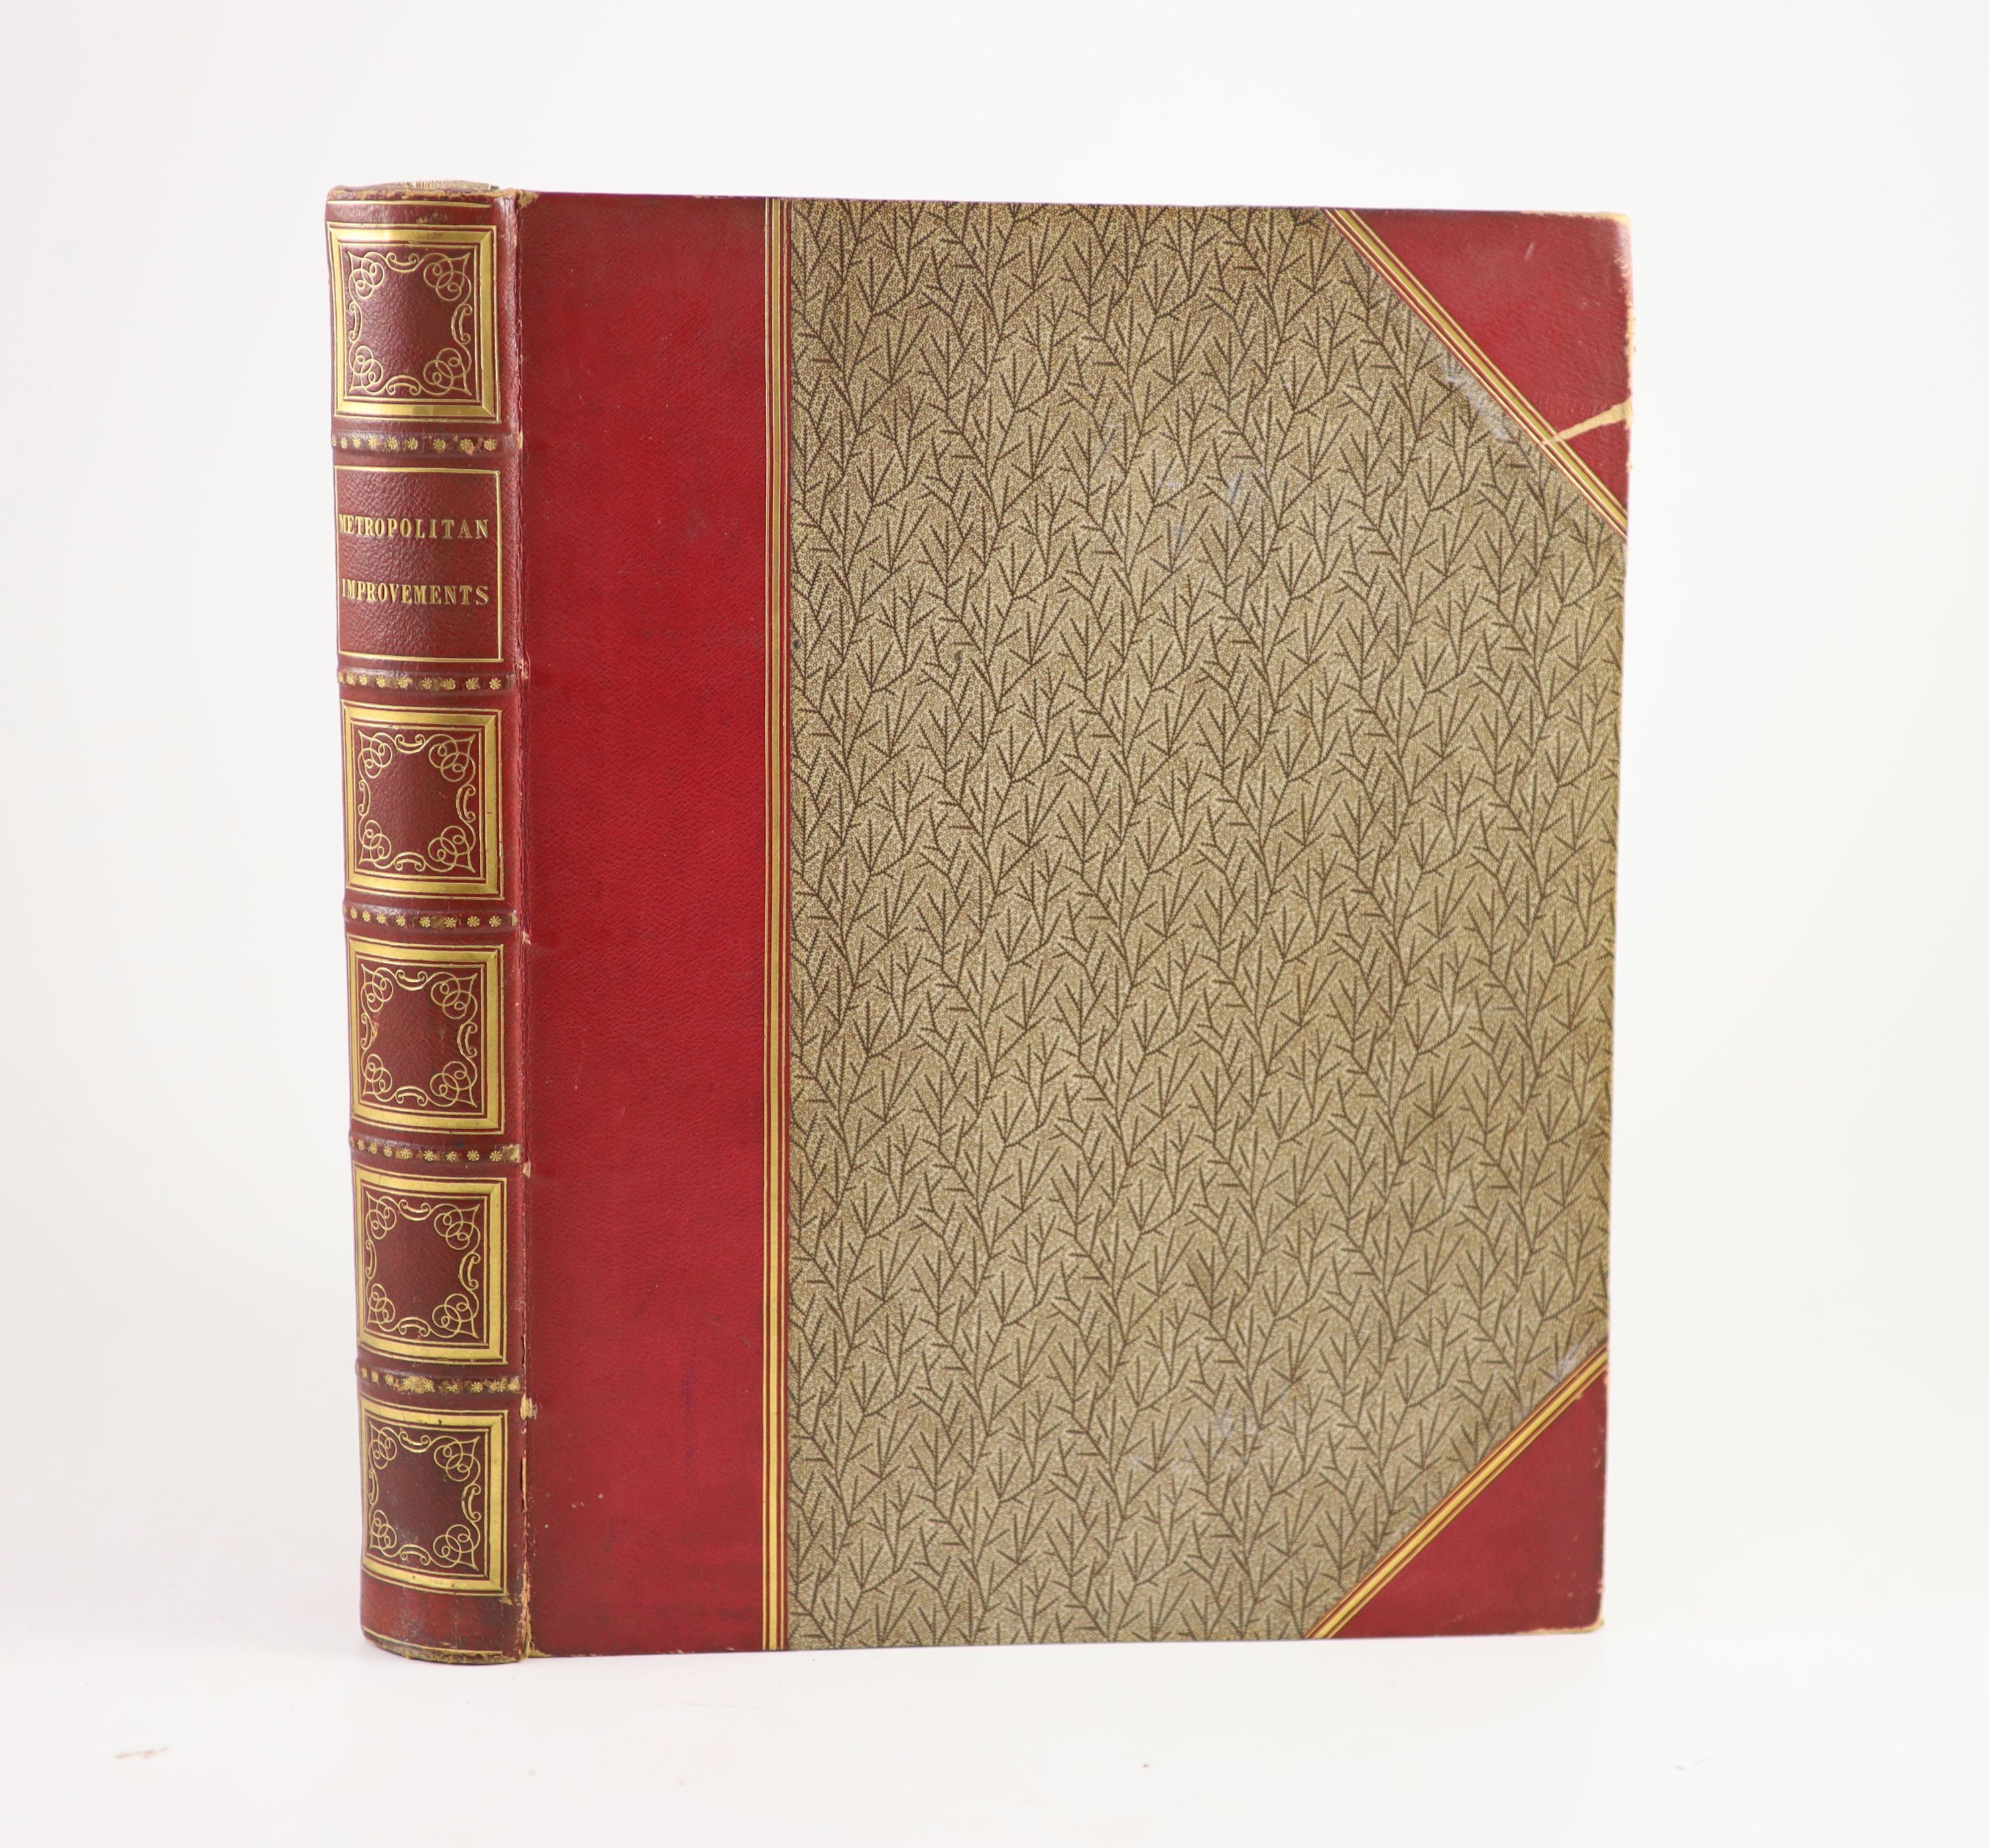 Shepherd, Thomas Hosmer - Metropolitan Improvements; or London in the Nineteenth Century, qto, half red morocco, London, 1827